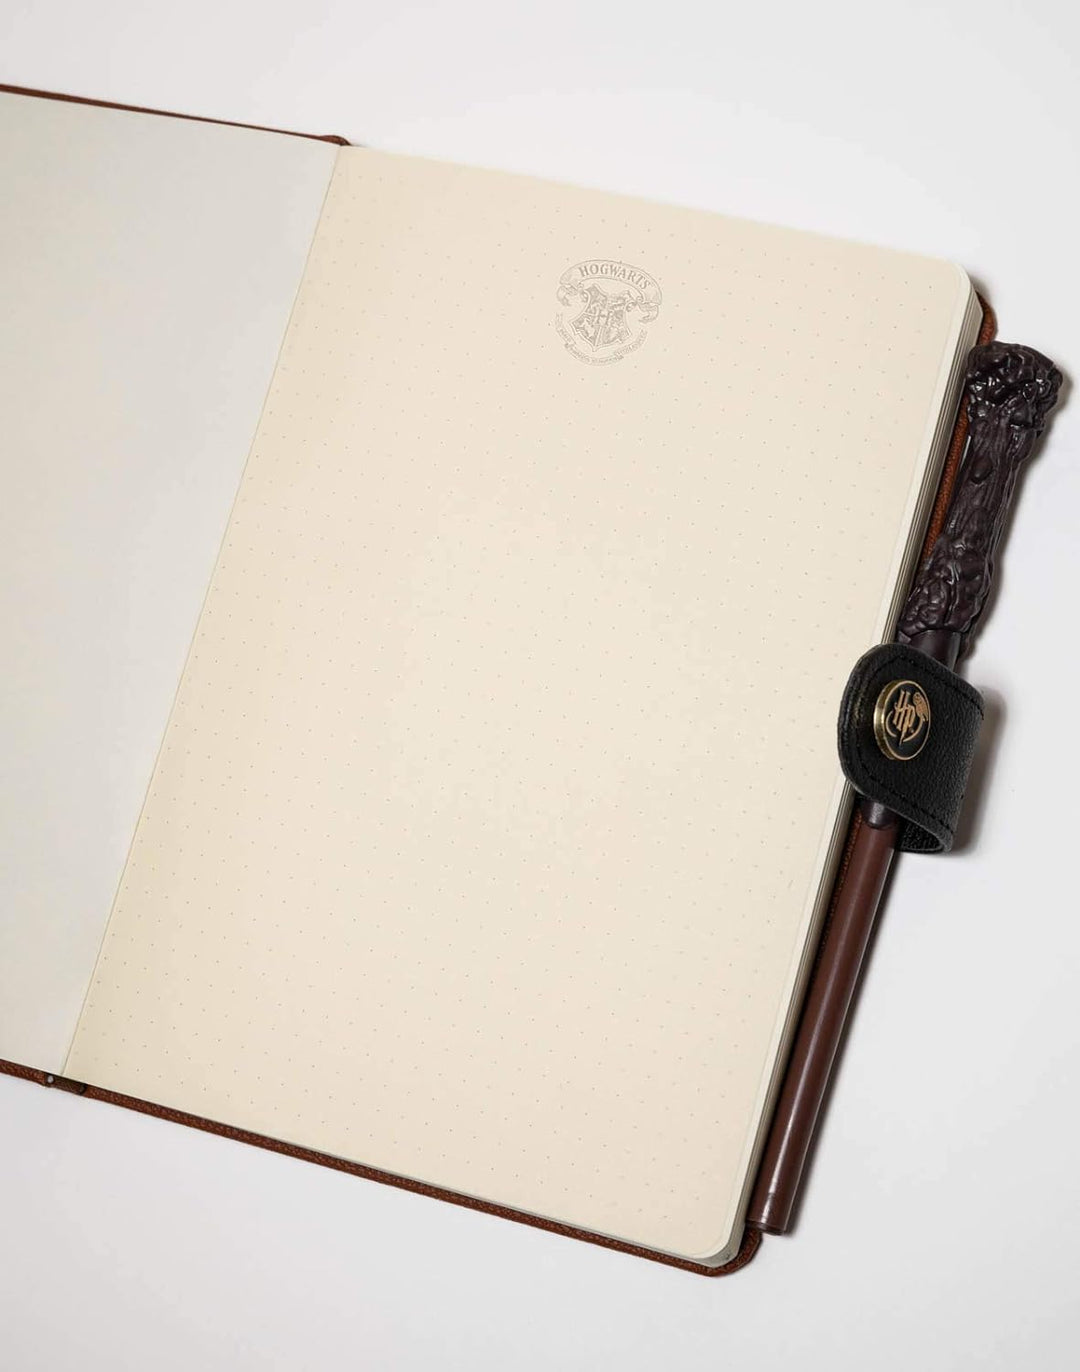 Grupo Erik Harry Potter Bullet Journal | A5 Notebook | Dotted Bullet Journal With Harry Potter Wand Pen